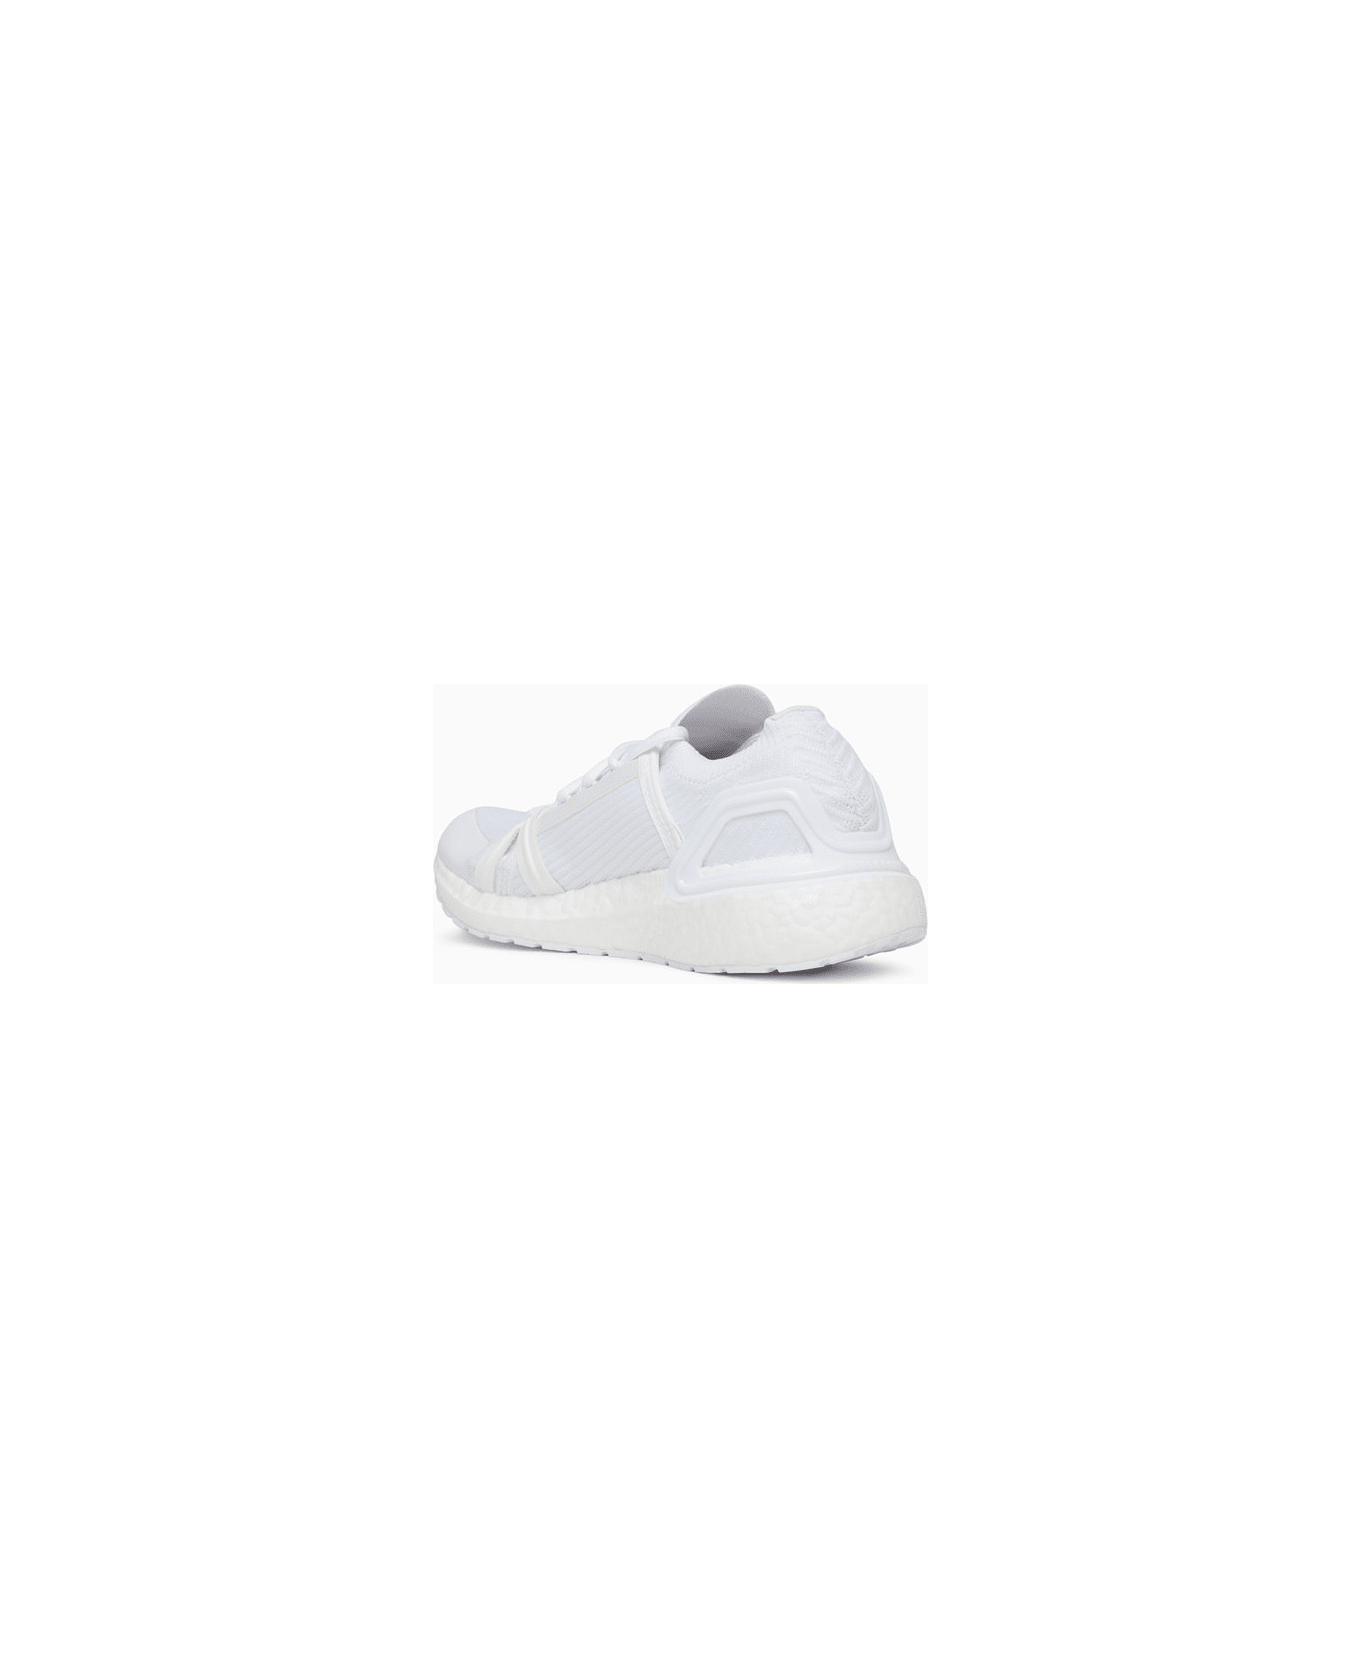 Adidas by Stella McCartney Asmc Ultraboost 20 Sneakers Hp6701 - White